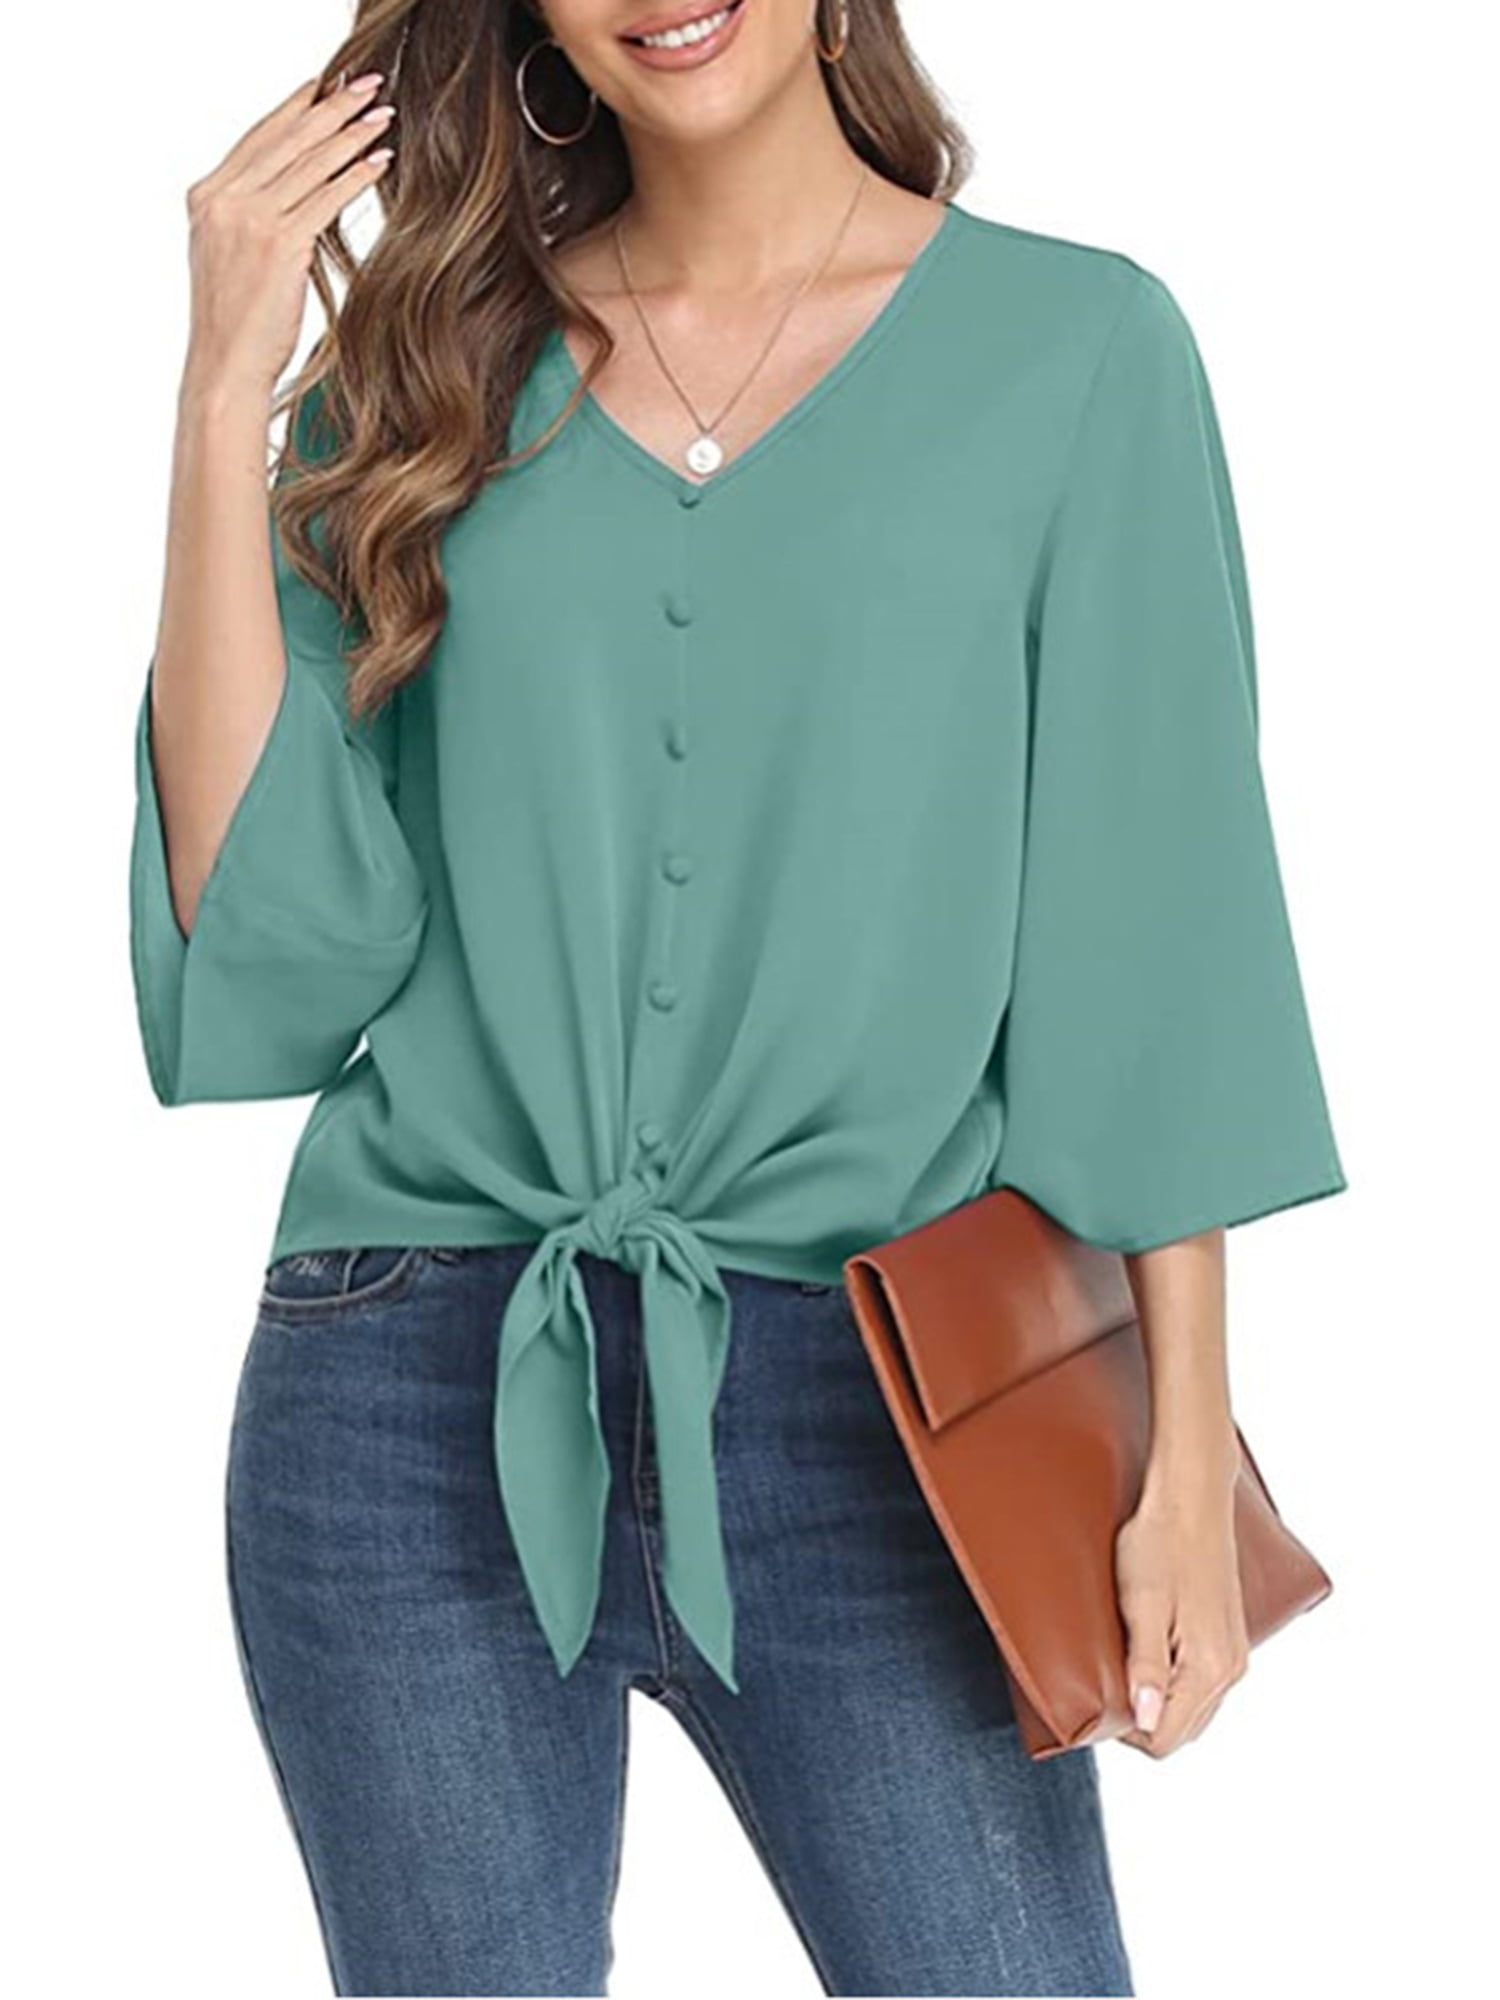 BLENCOT Women's V-Neck 3/4 Sleeve Shirt Mesh Panel Blouse Loose Solid Color Button Front Tops Blouse